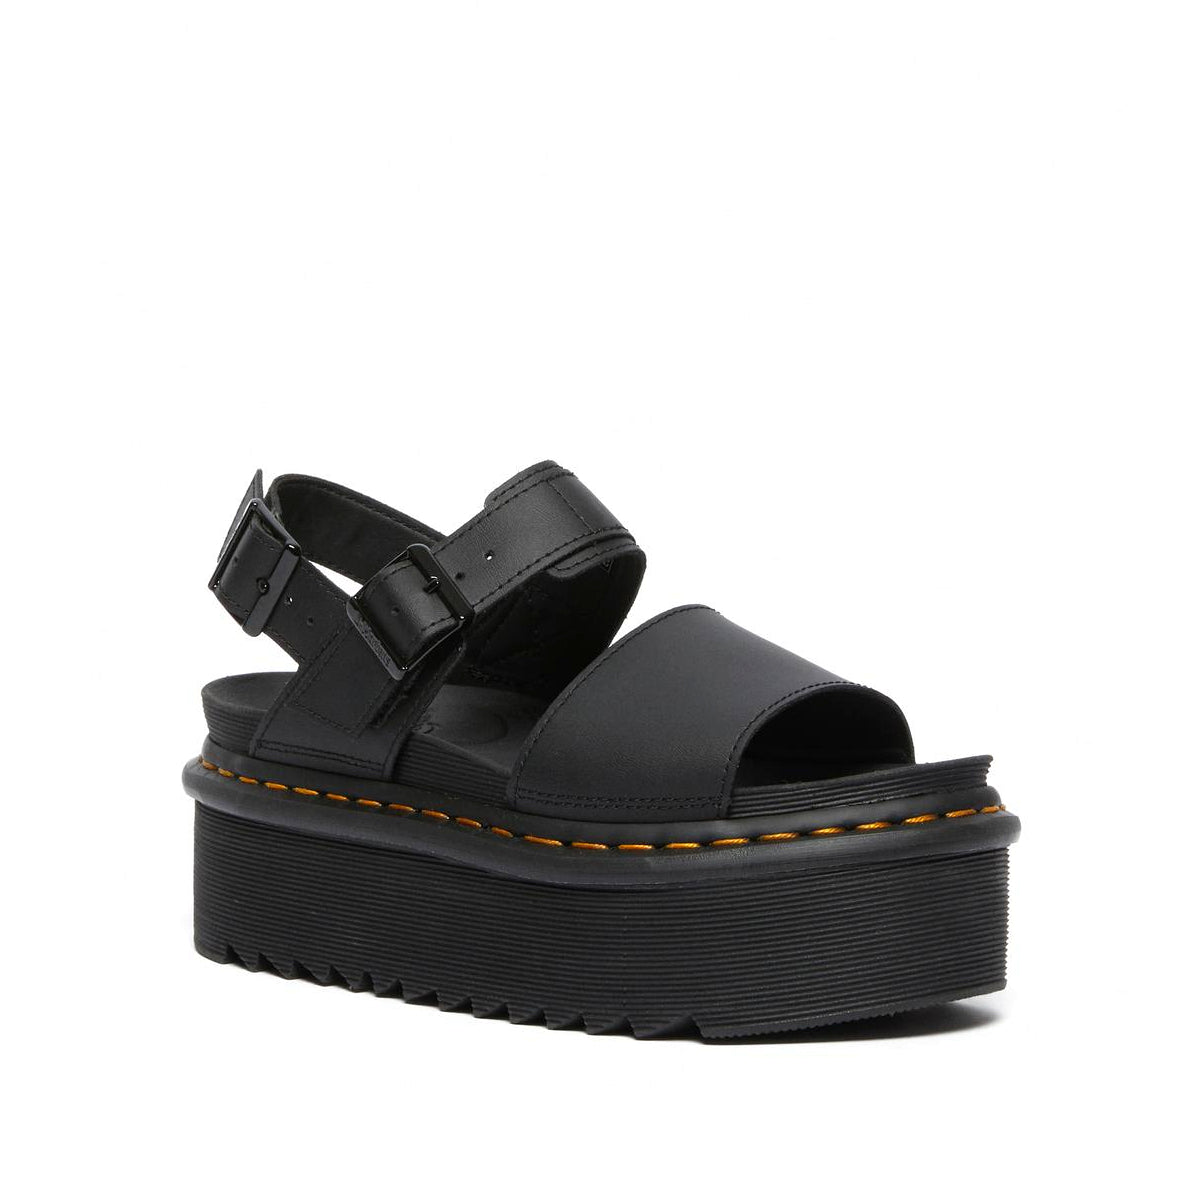 Voss Quad - shoe&me - Dr. Martens - Sandal - Sandals, Summer 22, Wedges, Womens